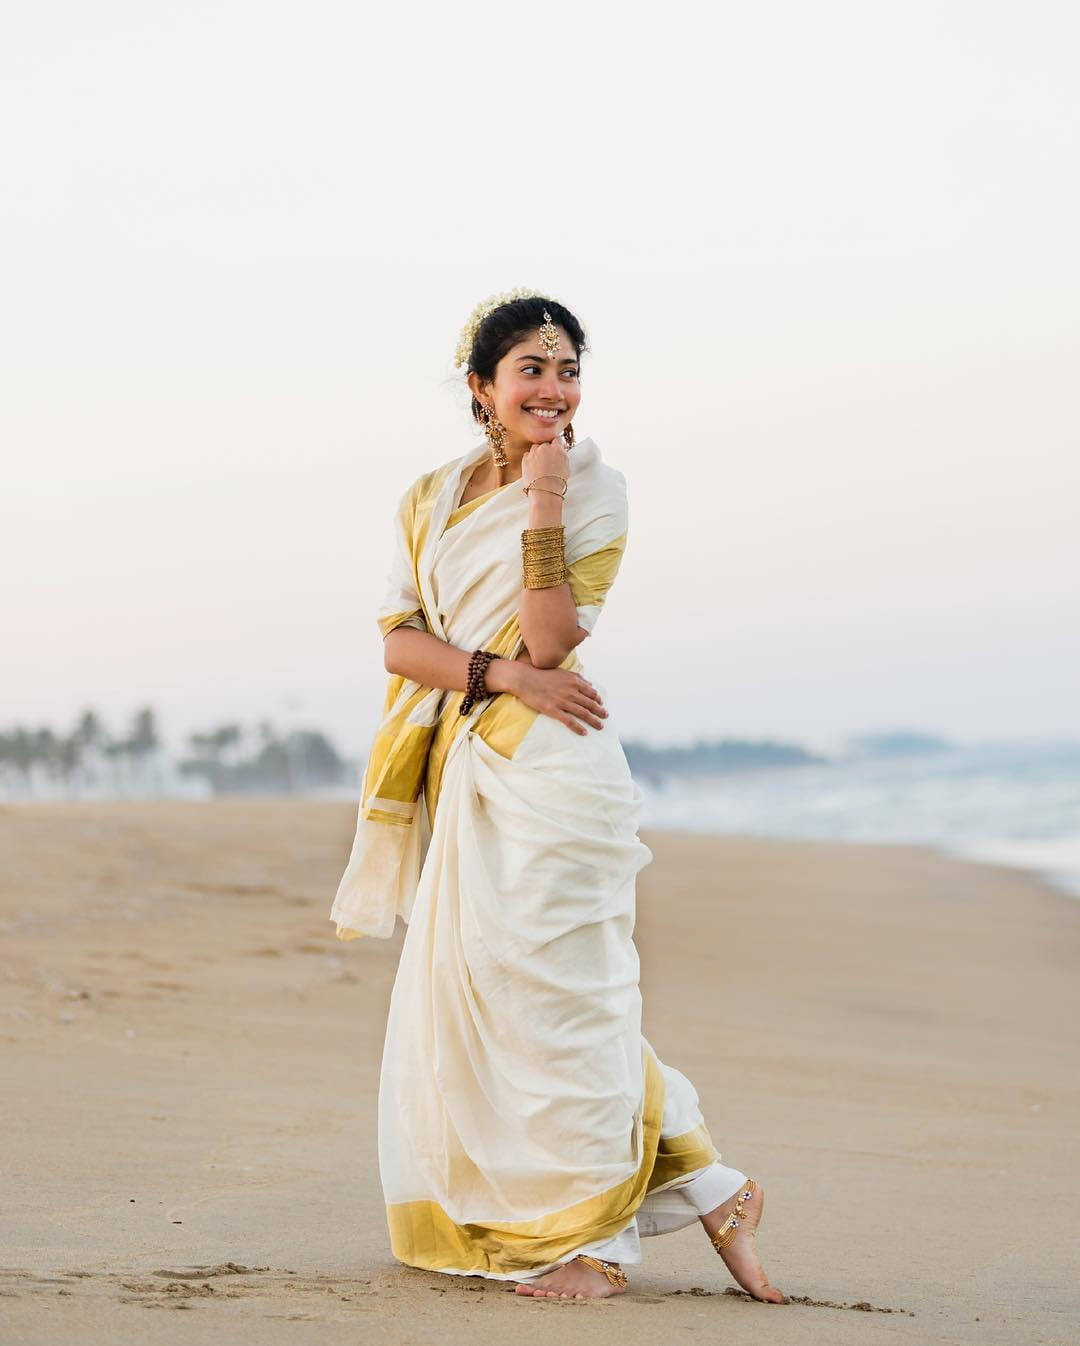 Sai Pallavi Modeling Near Seashore Background